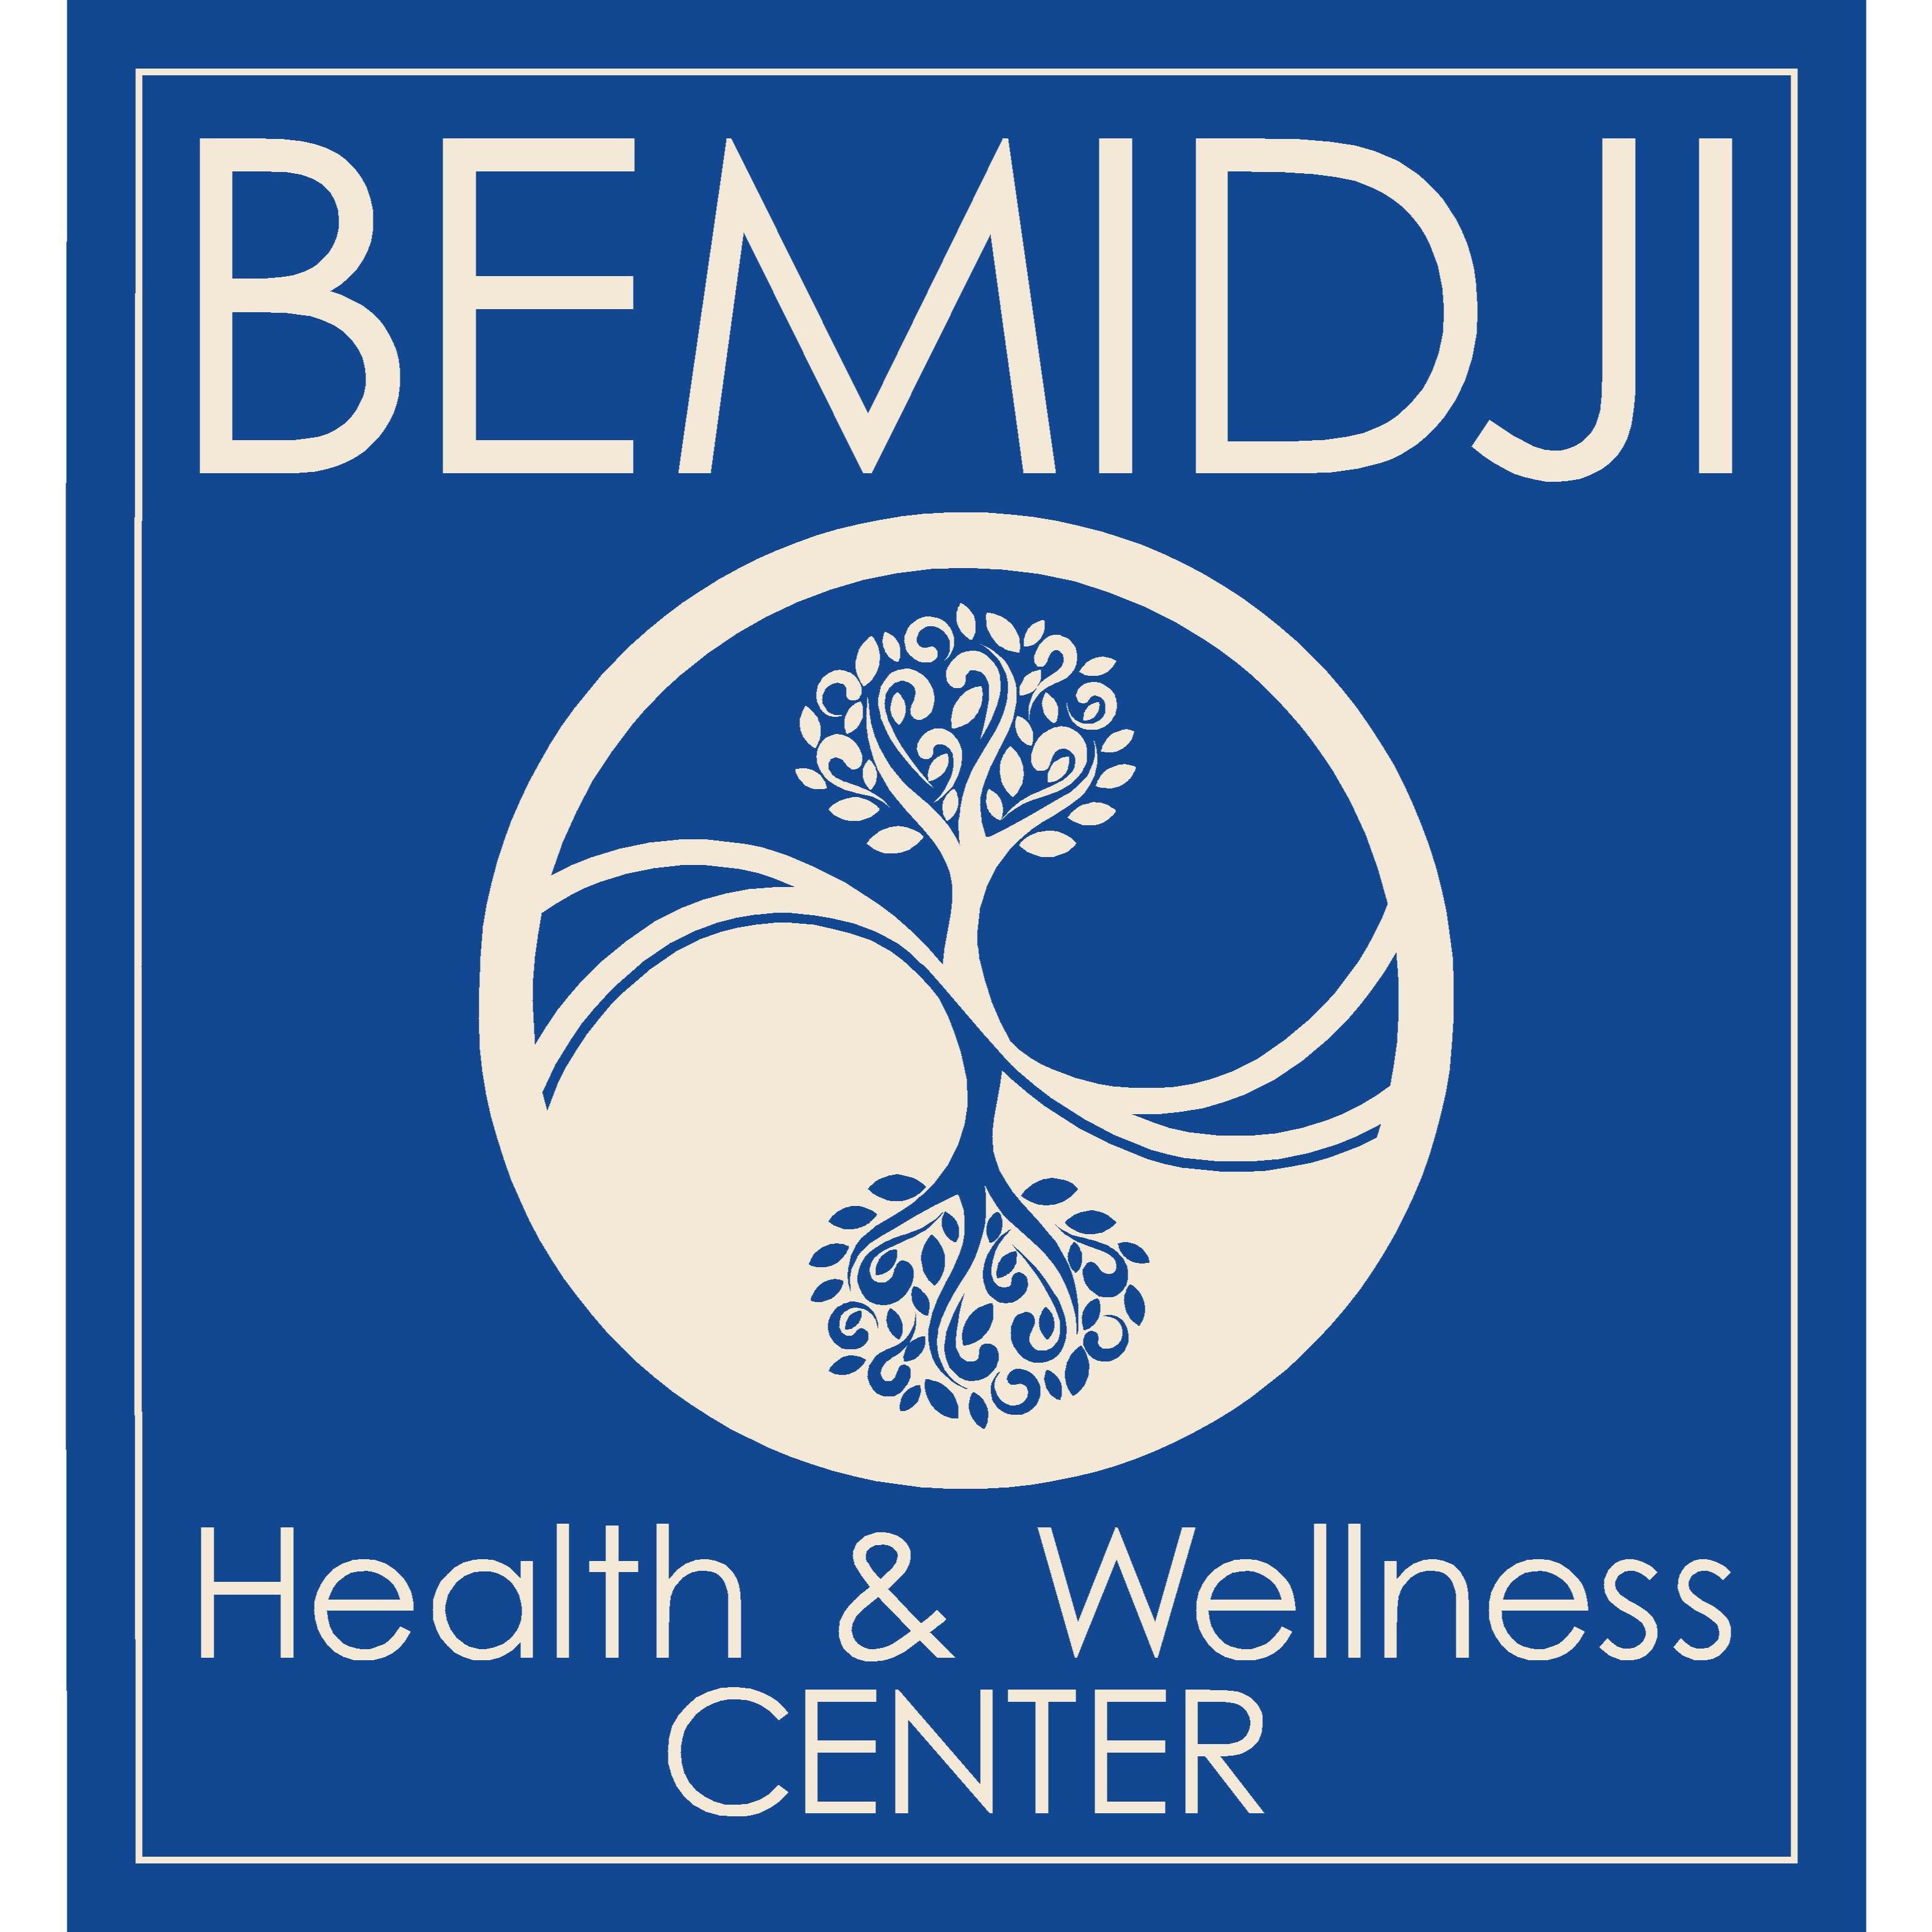 Bemidji Health & Wellness Center - Bemidji, MN 56601 - (218)444-8727 | ShowMeLocal.com